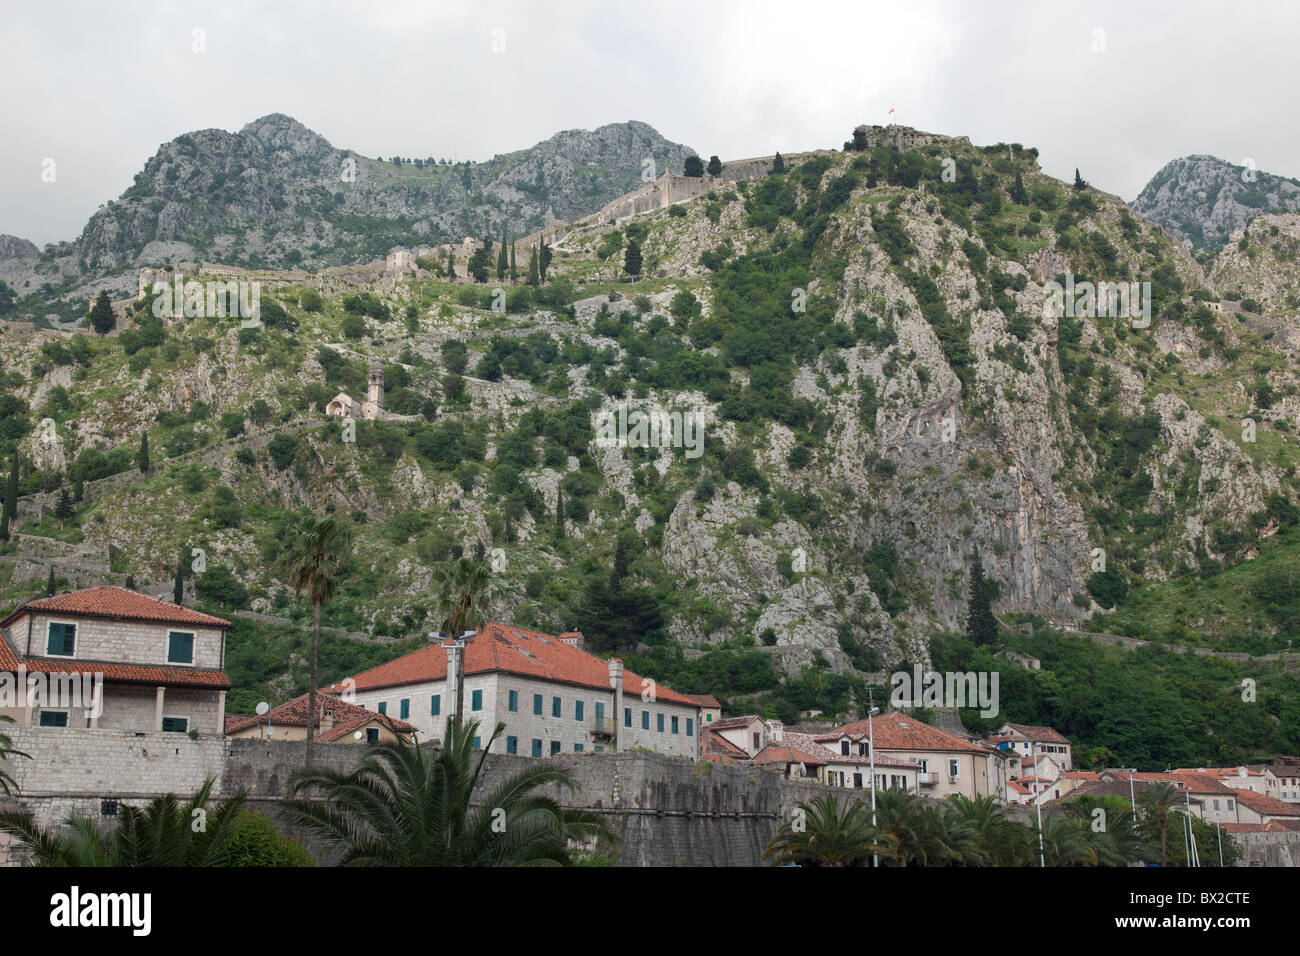 A coastal town on the Bay of Kotor, Montenegro Stock Photo